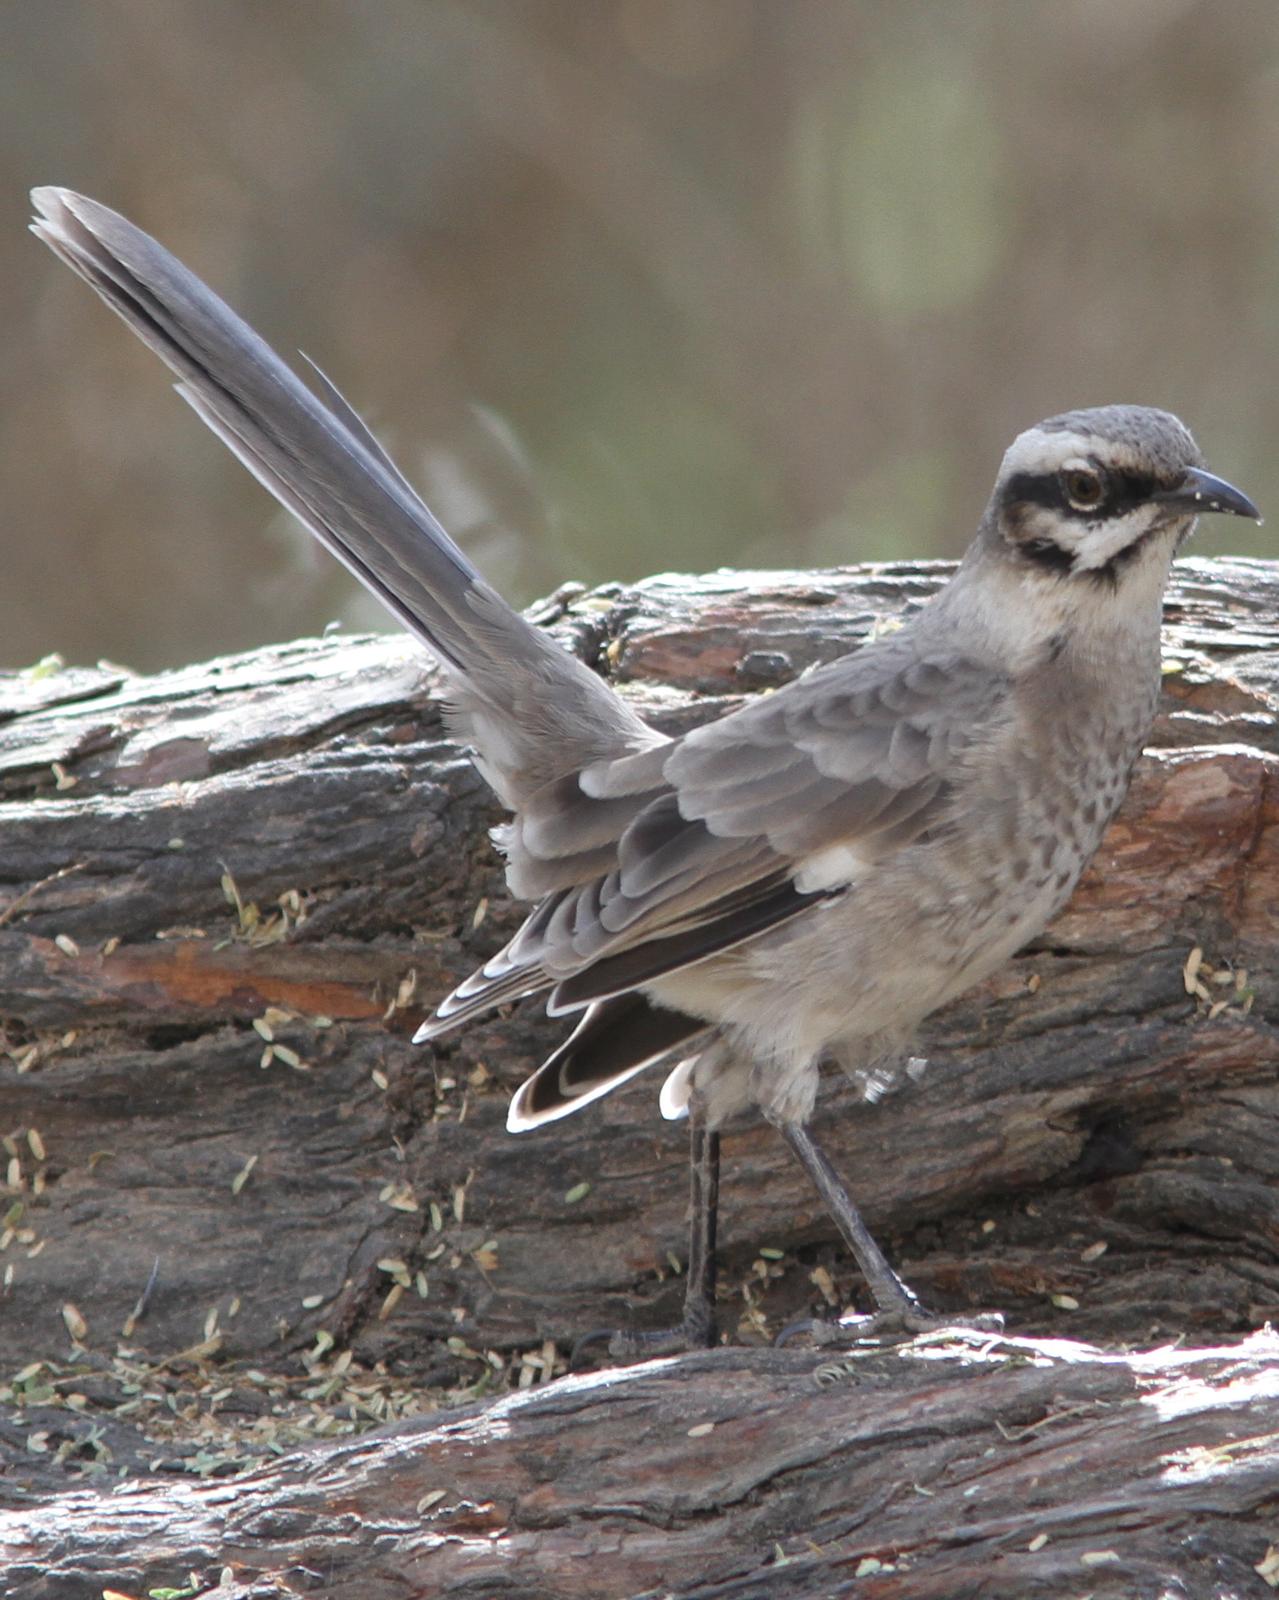 Long-tailed Mockingbird Photo by Marcelo Padua